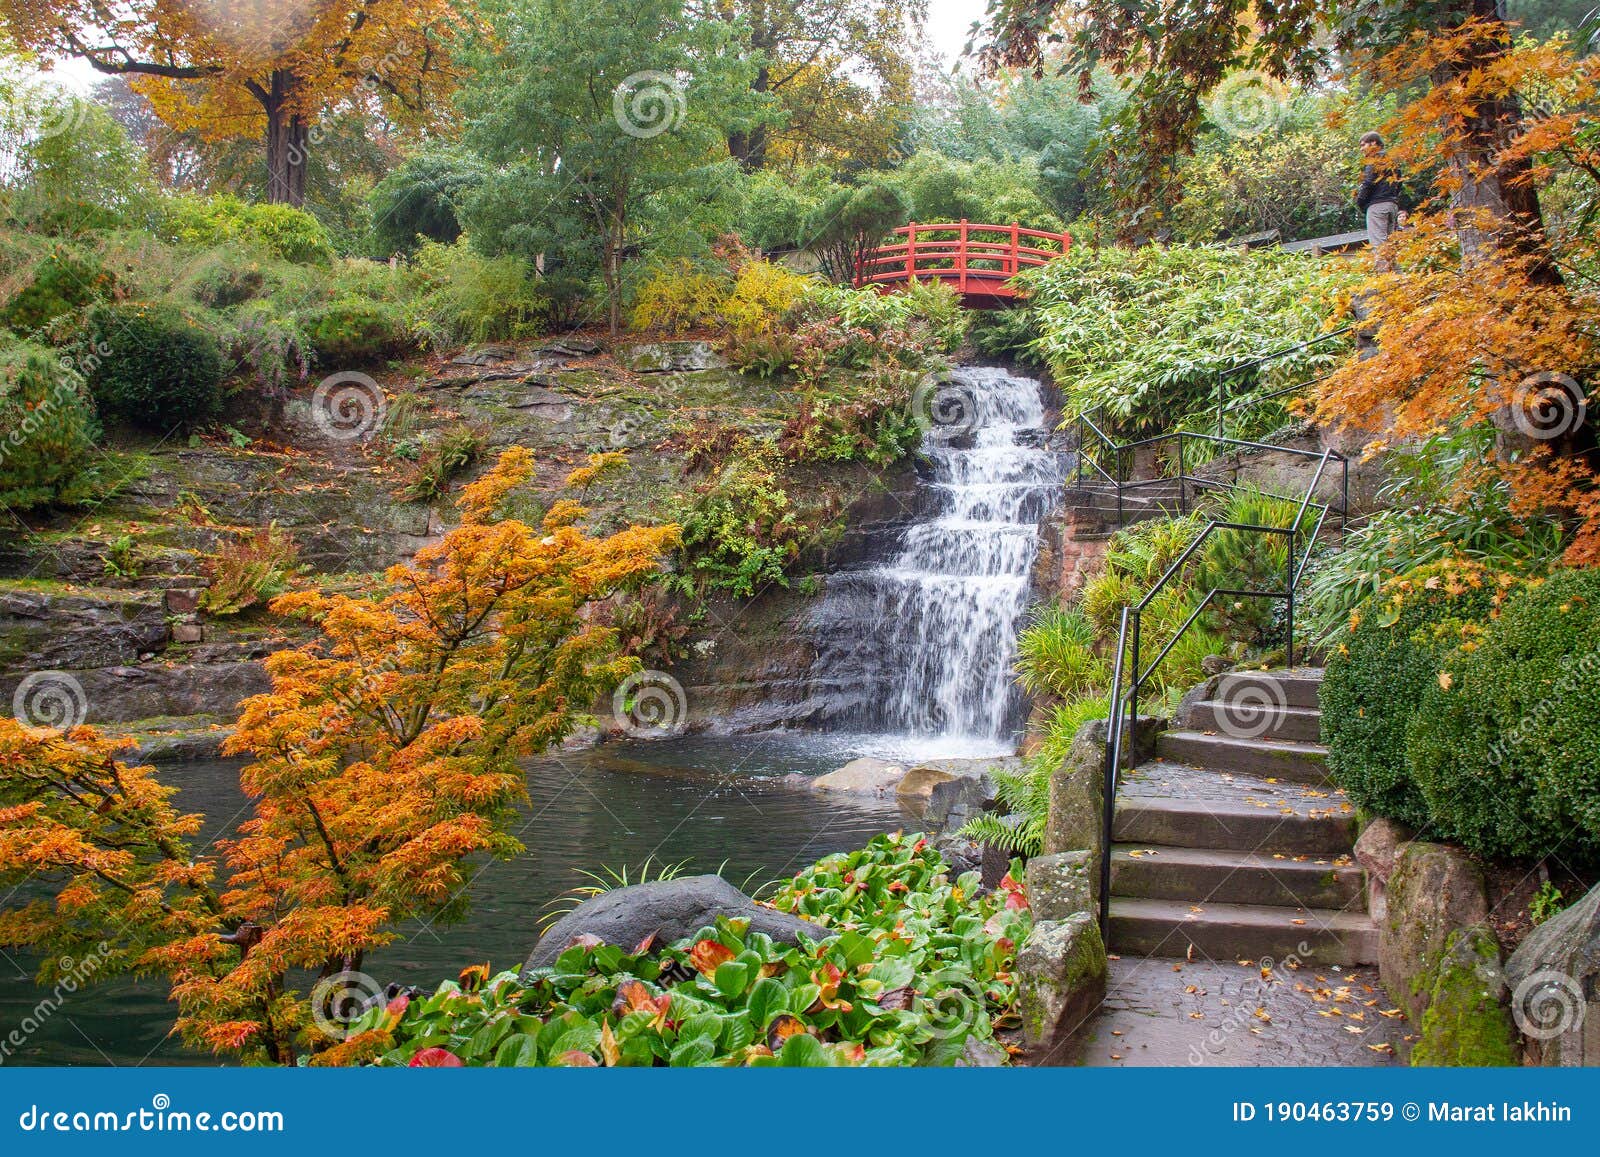 Amazing Waterfall in Japanese Garden of Kaiserslautern Stock Image ...